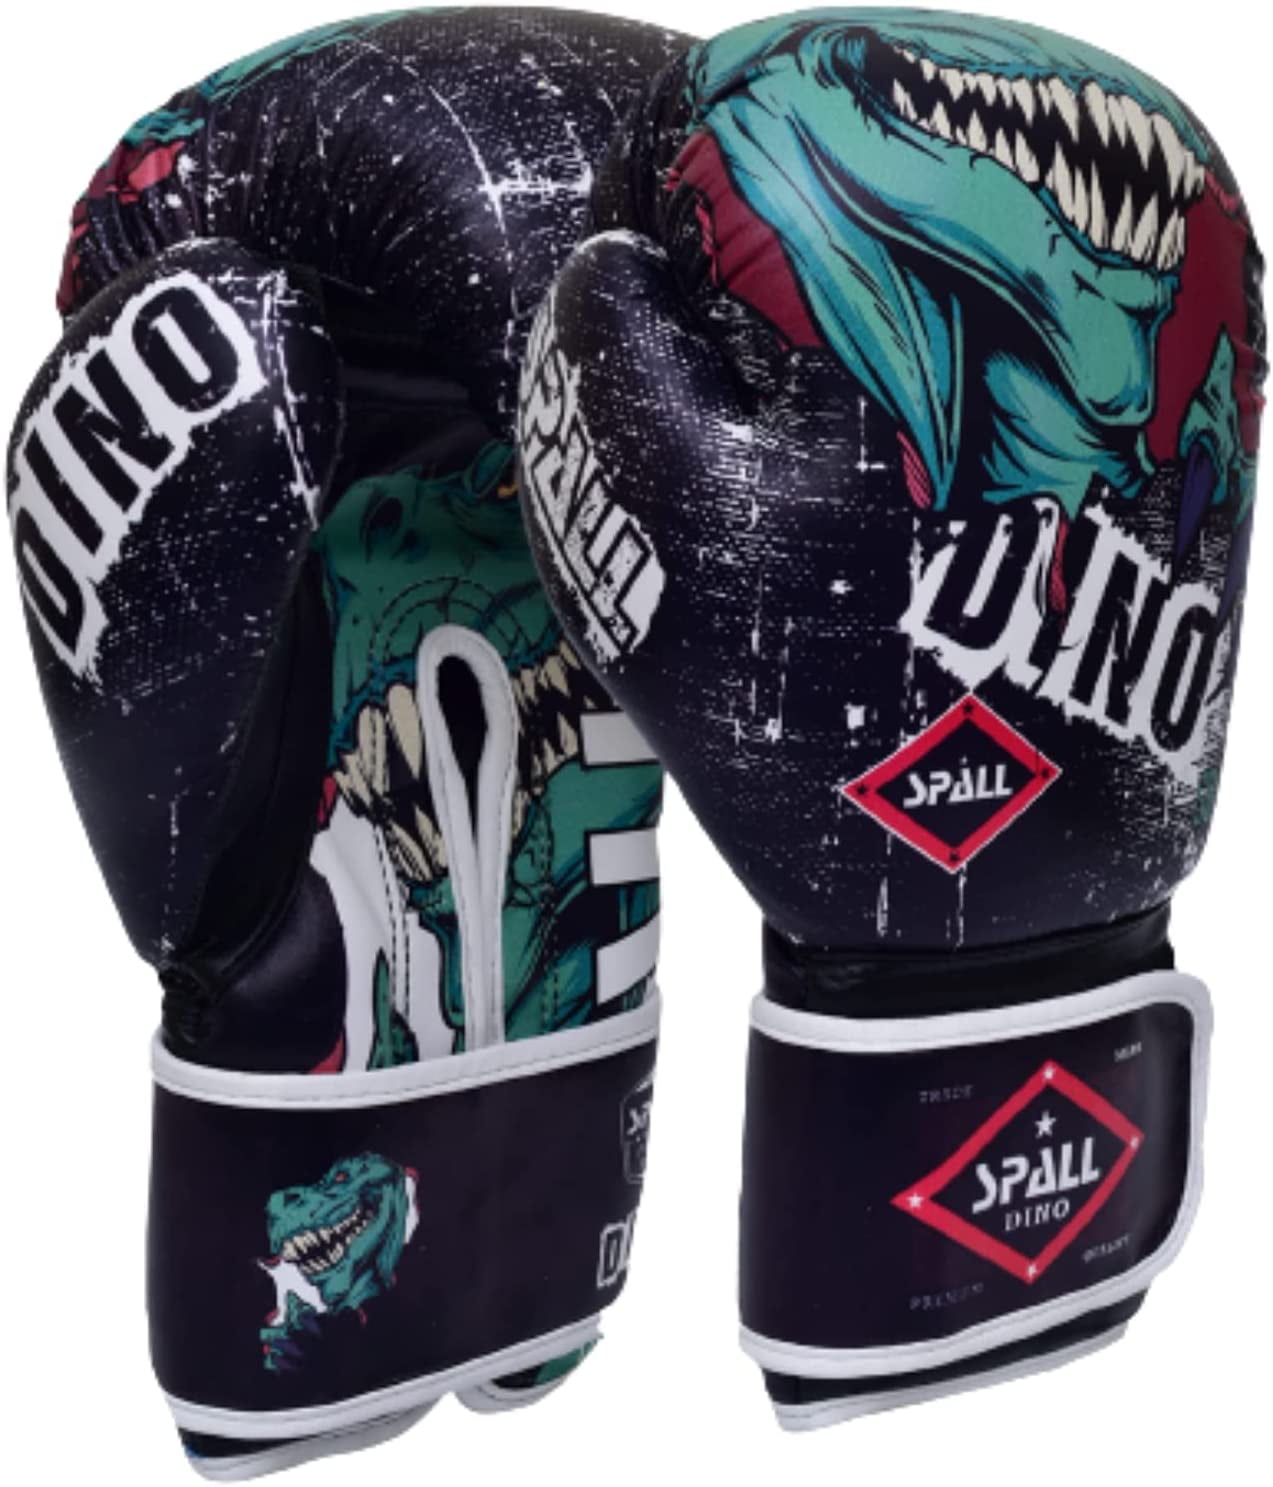 Details about   Booster V3 Boxing Gloves Adult Muay Thai Kickboxing Sparring Gloves 10 12 14 oz 